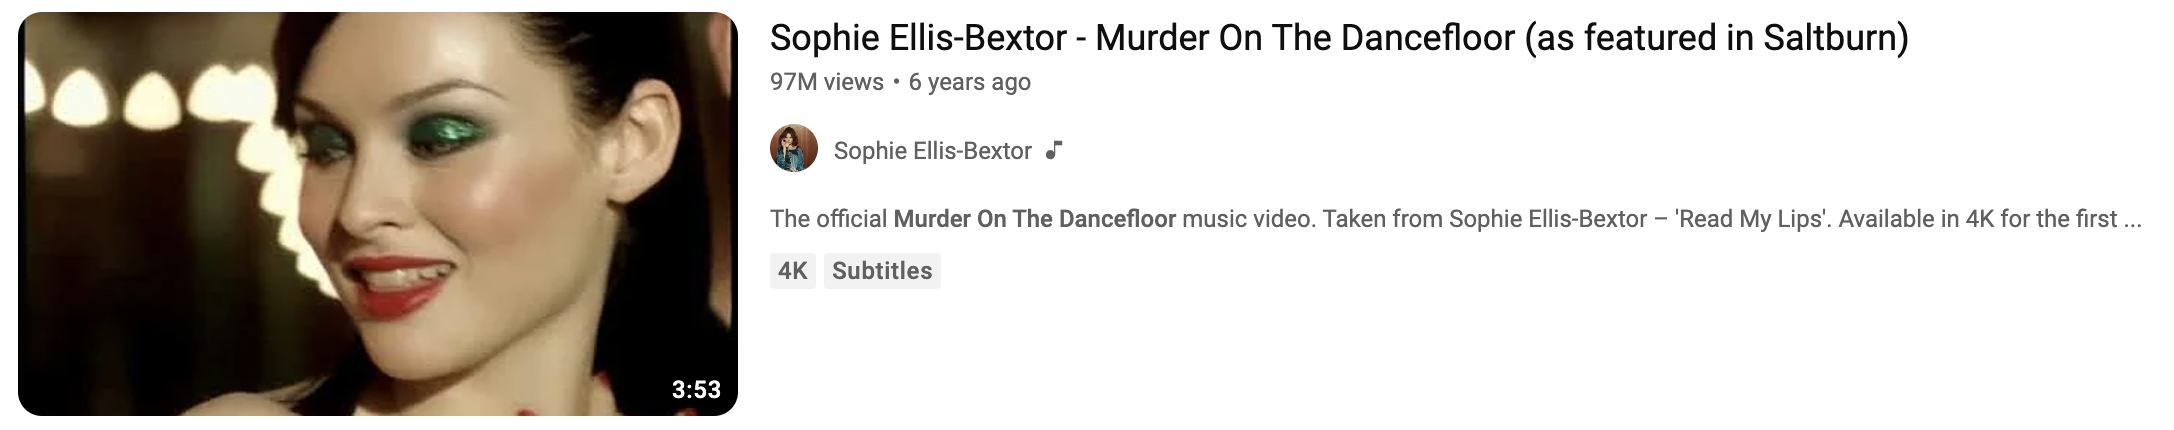 Sophie Ellis-Bextor's Murder On The Dancefloor music video now reads (as featured in Saltburn)